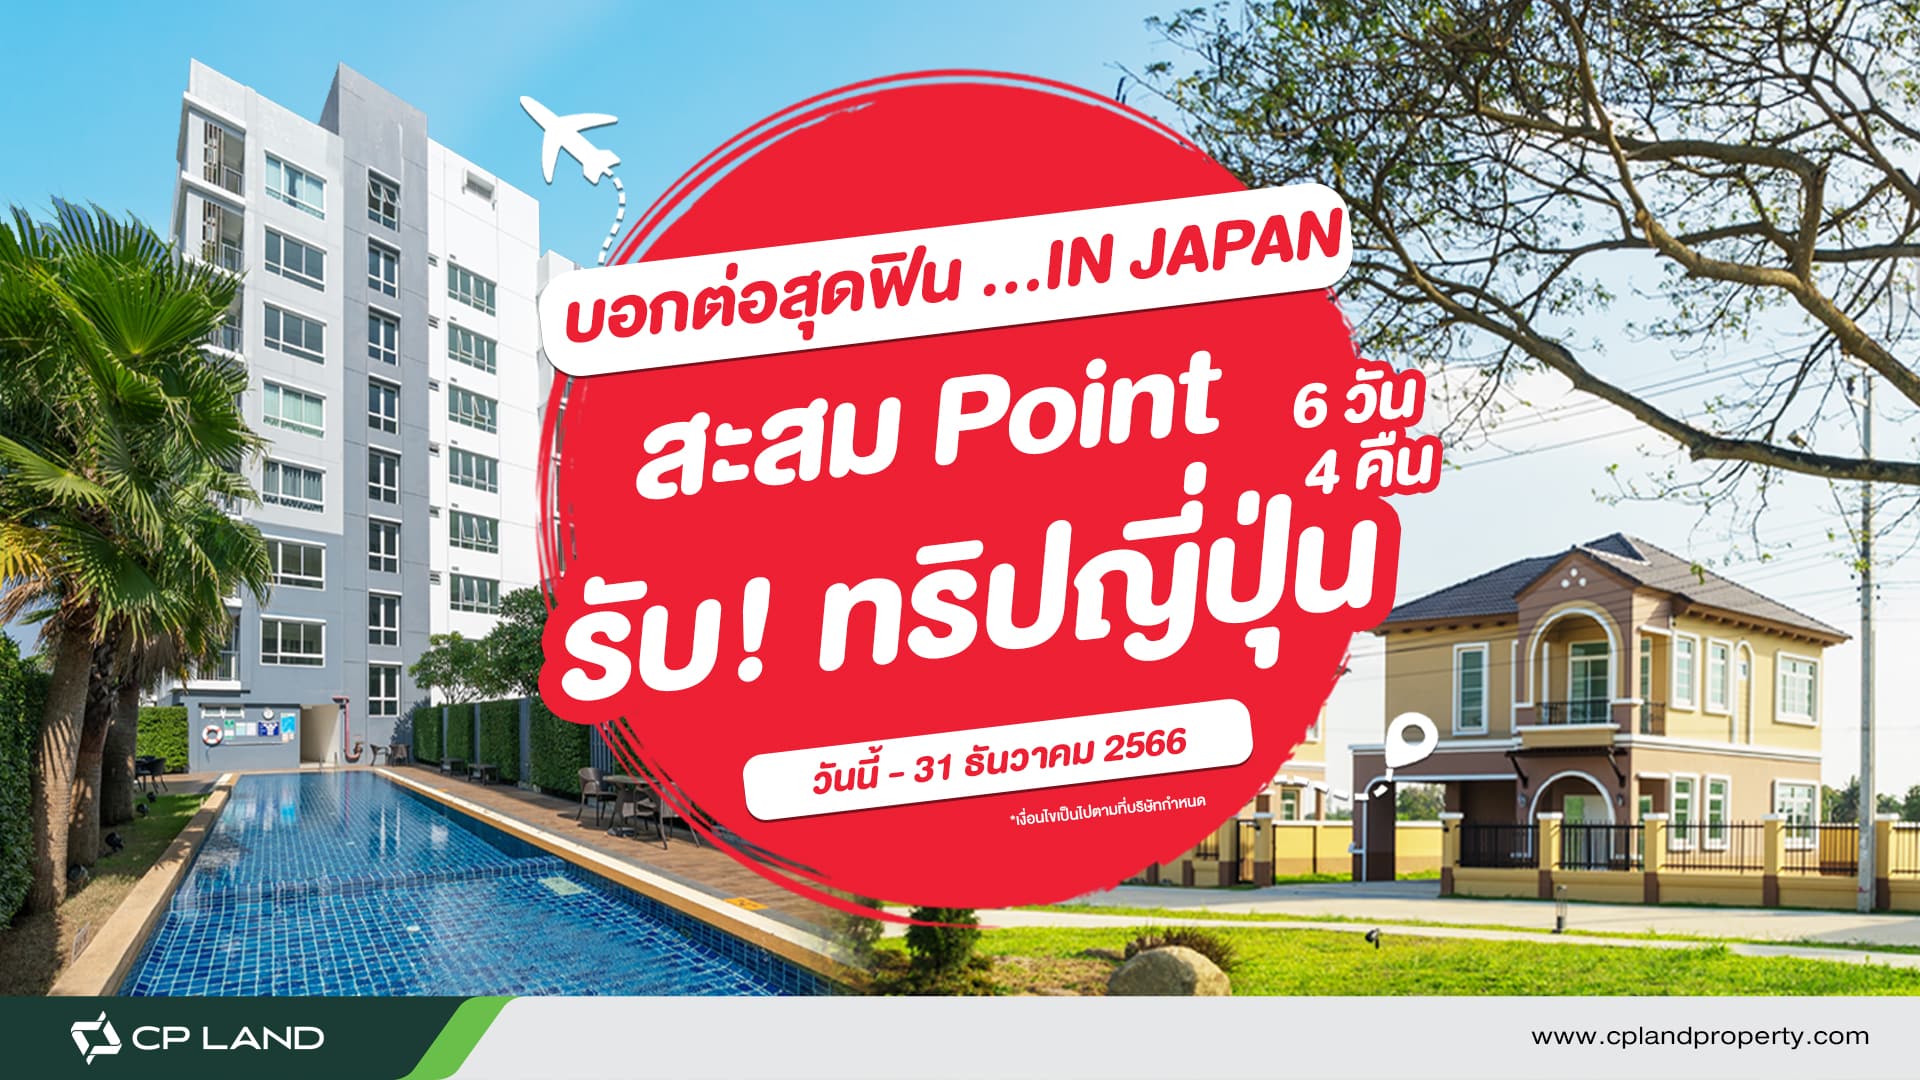 Special Campaign : บอกต่อสุดฟิน...in Japan ชวนเพื่อนรักมาเป็นเพื่อนบ้าน สะสม point รับทริปญี่ปุ่น 6 วัน 4 คืน!